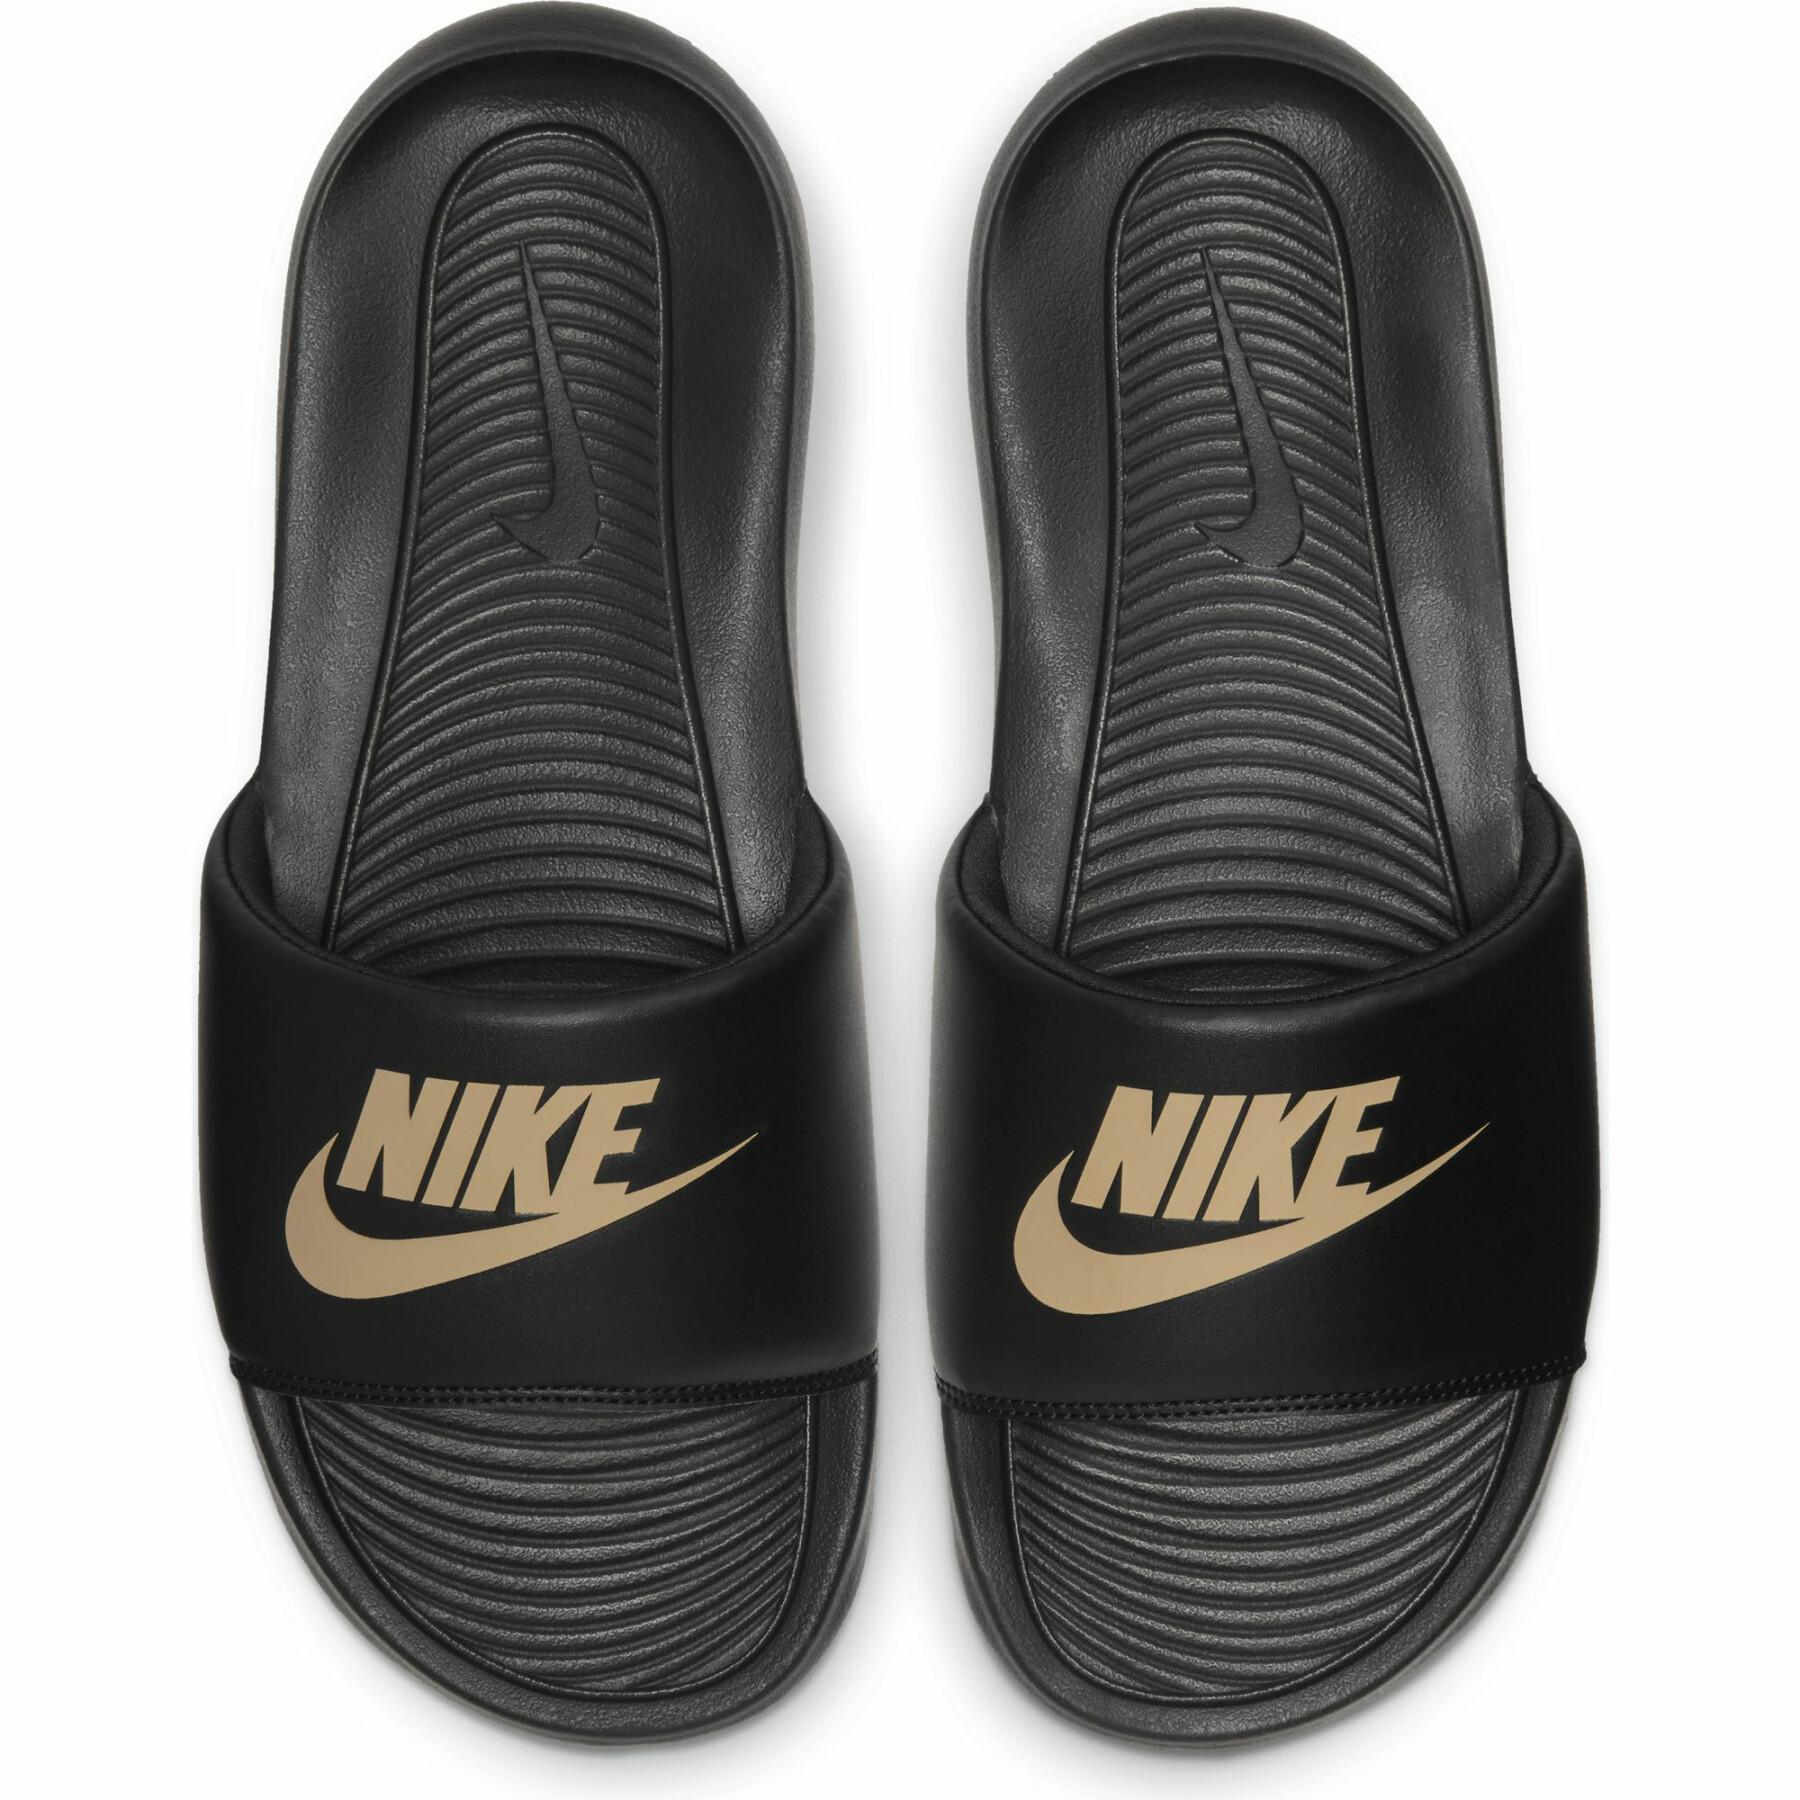 Sapatos de sapateado Nike Victori One